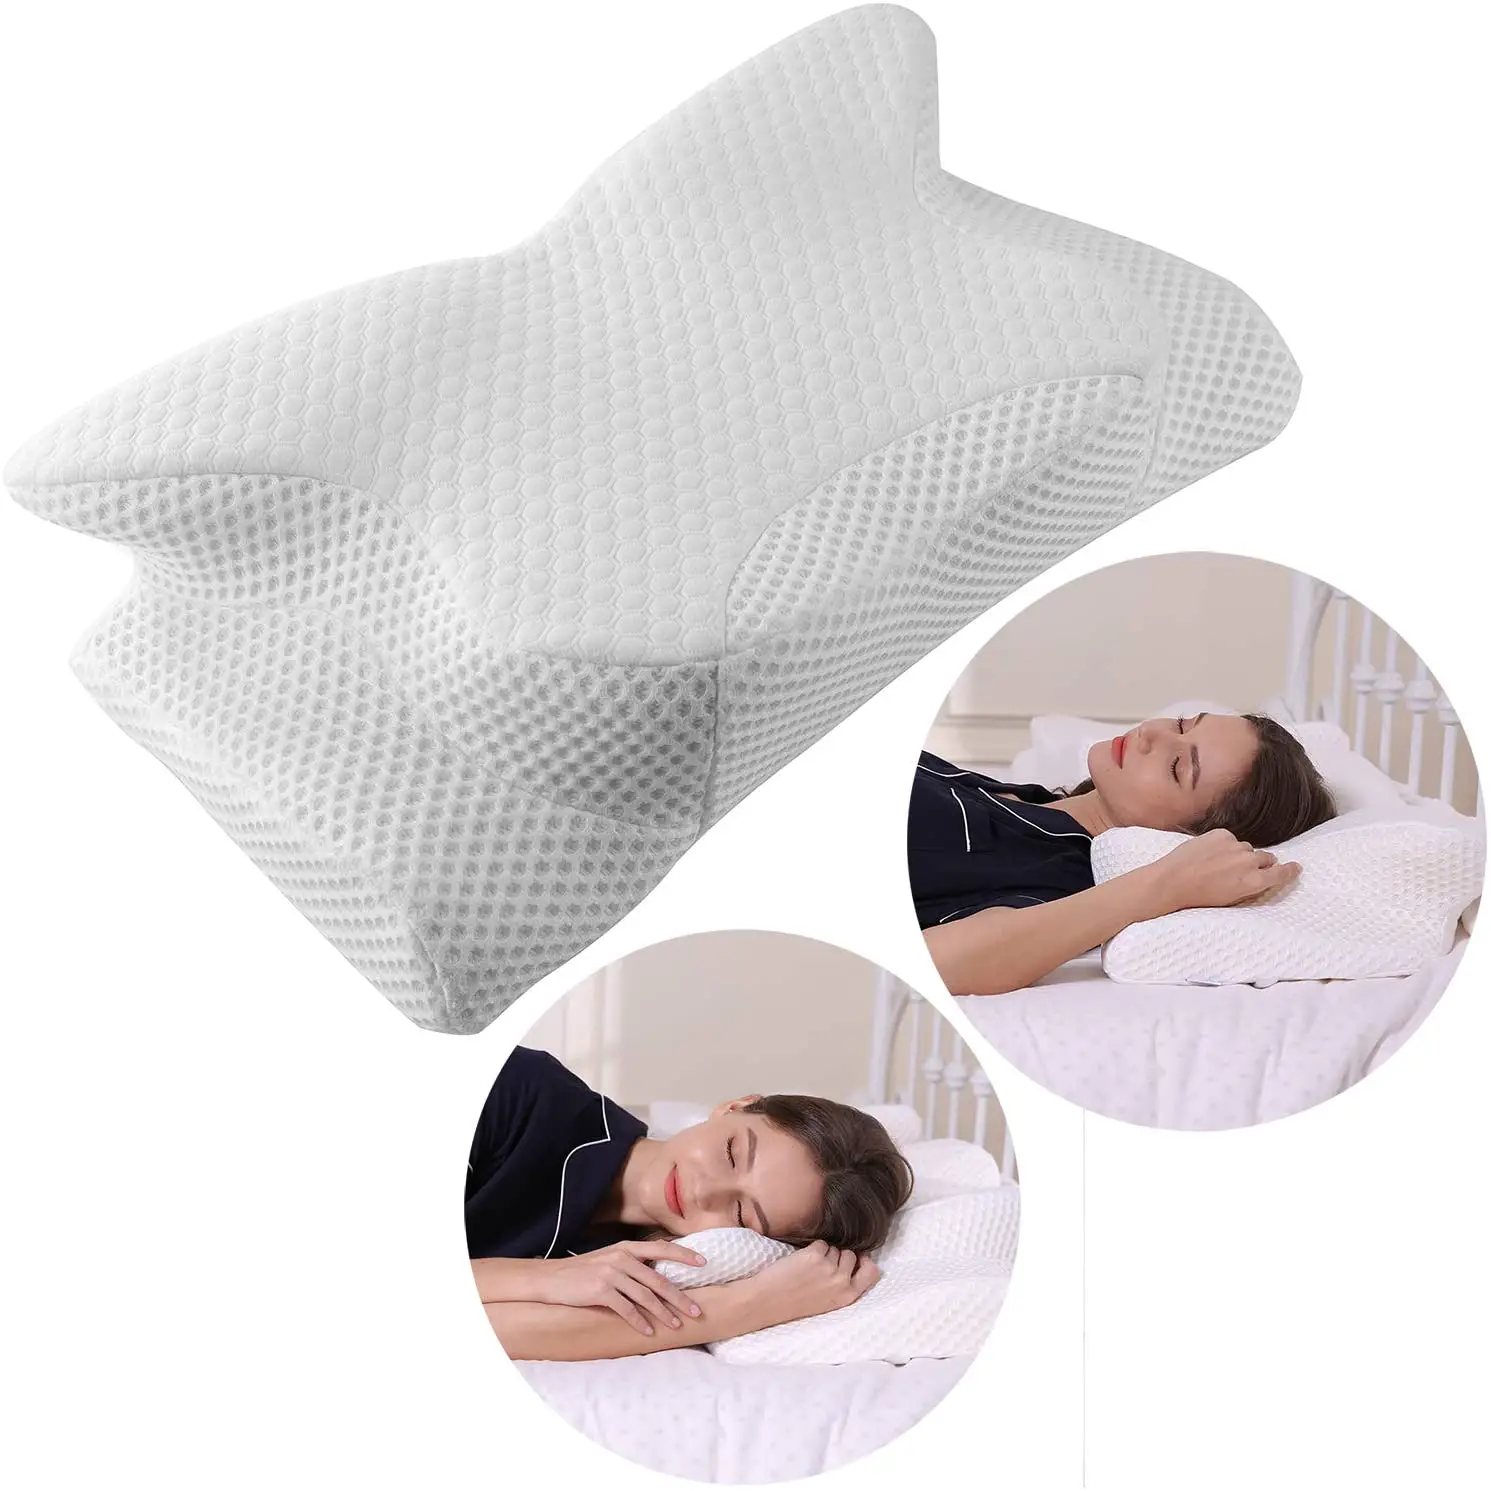 Lets explore orthopedic pillow for sleeping on Amazon